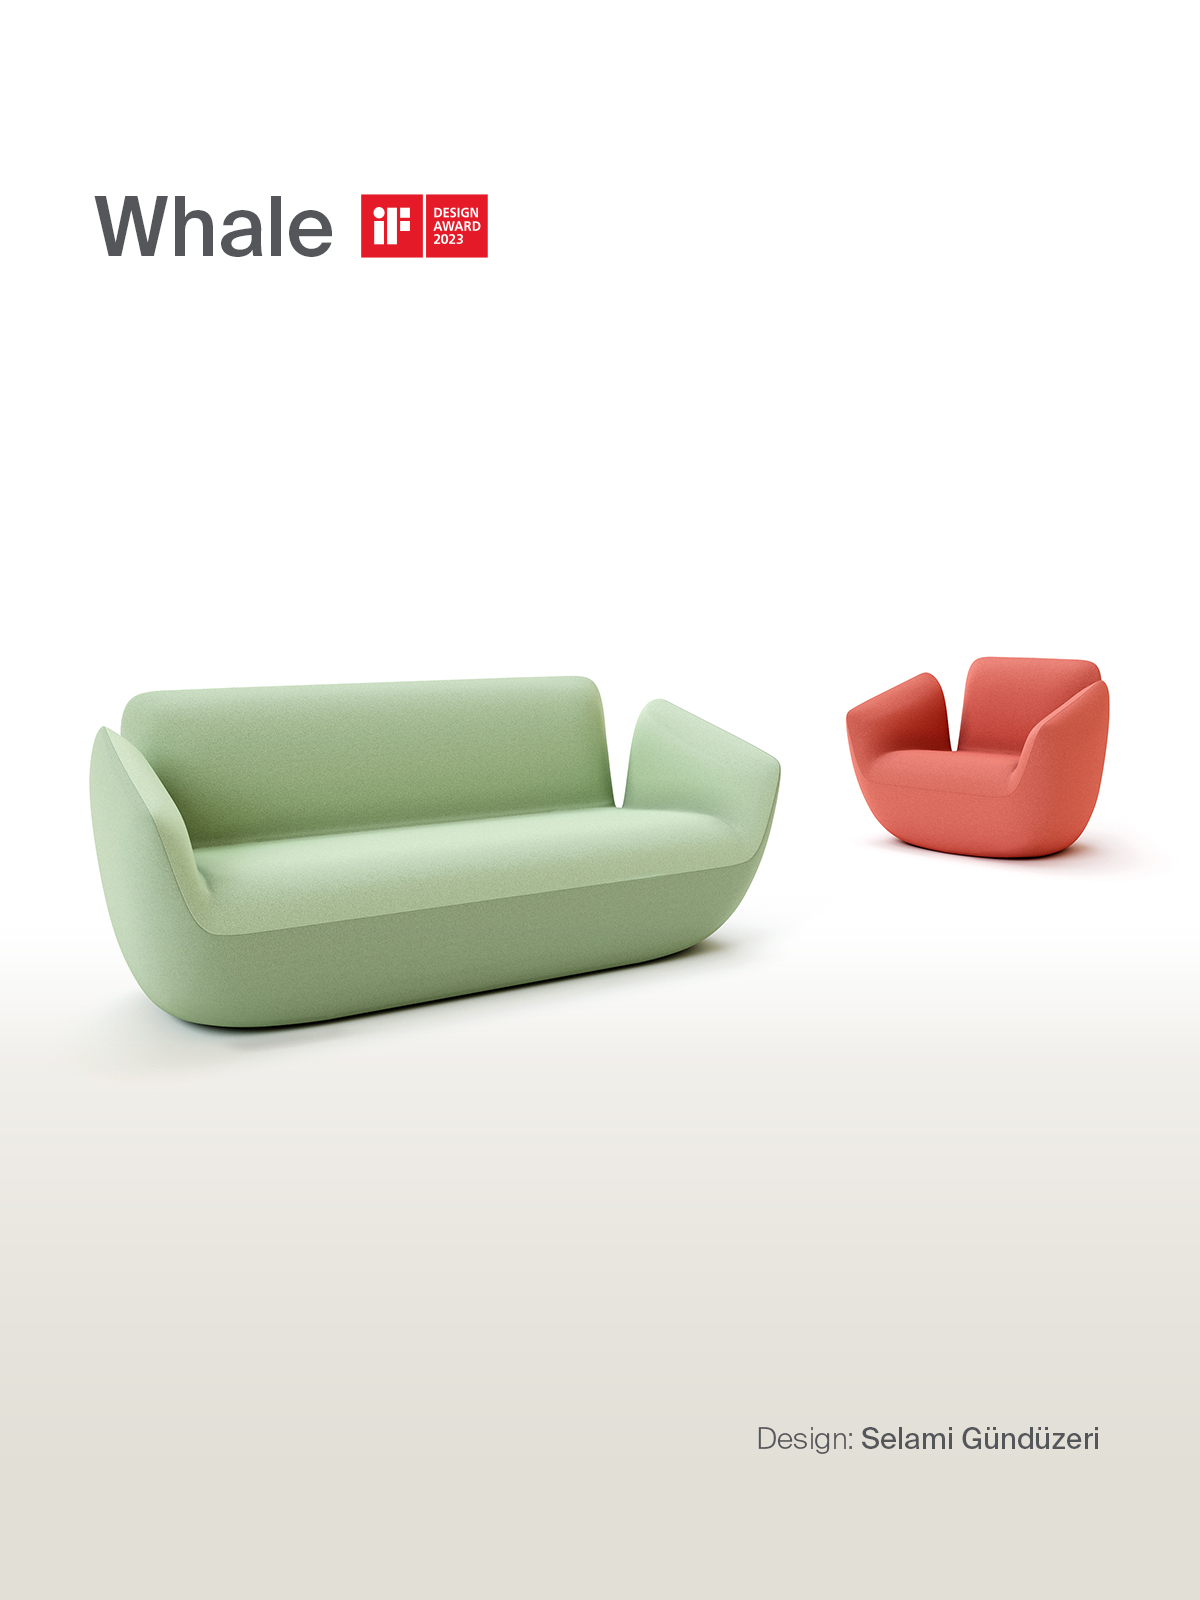 Slider - Whale